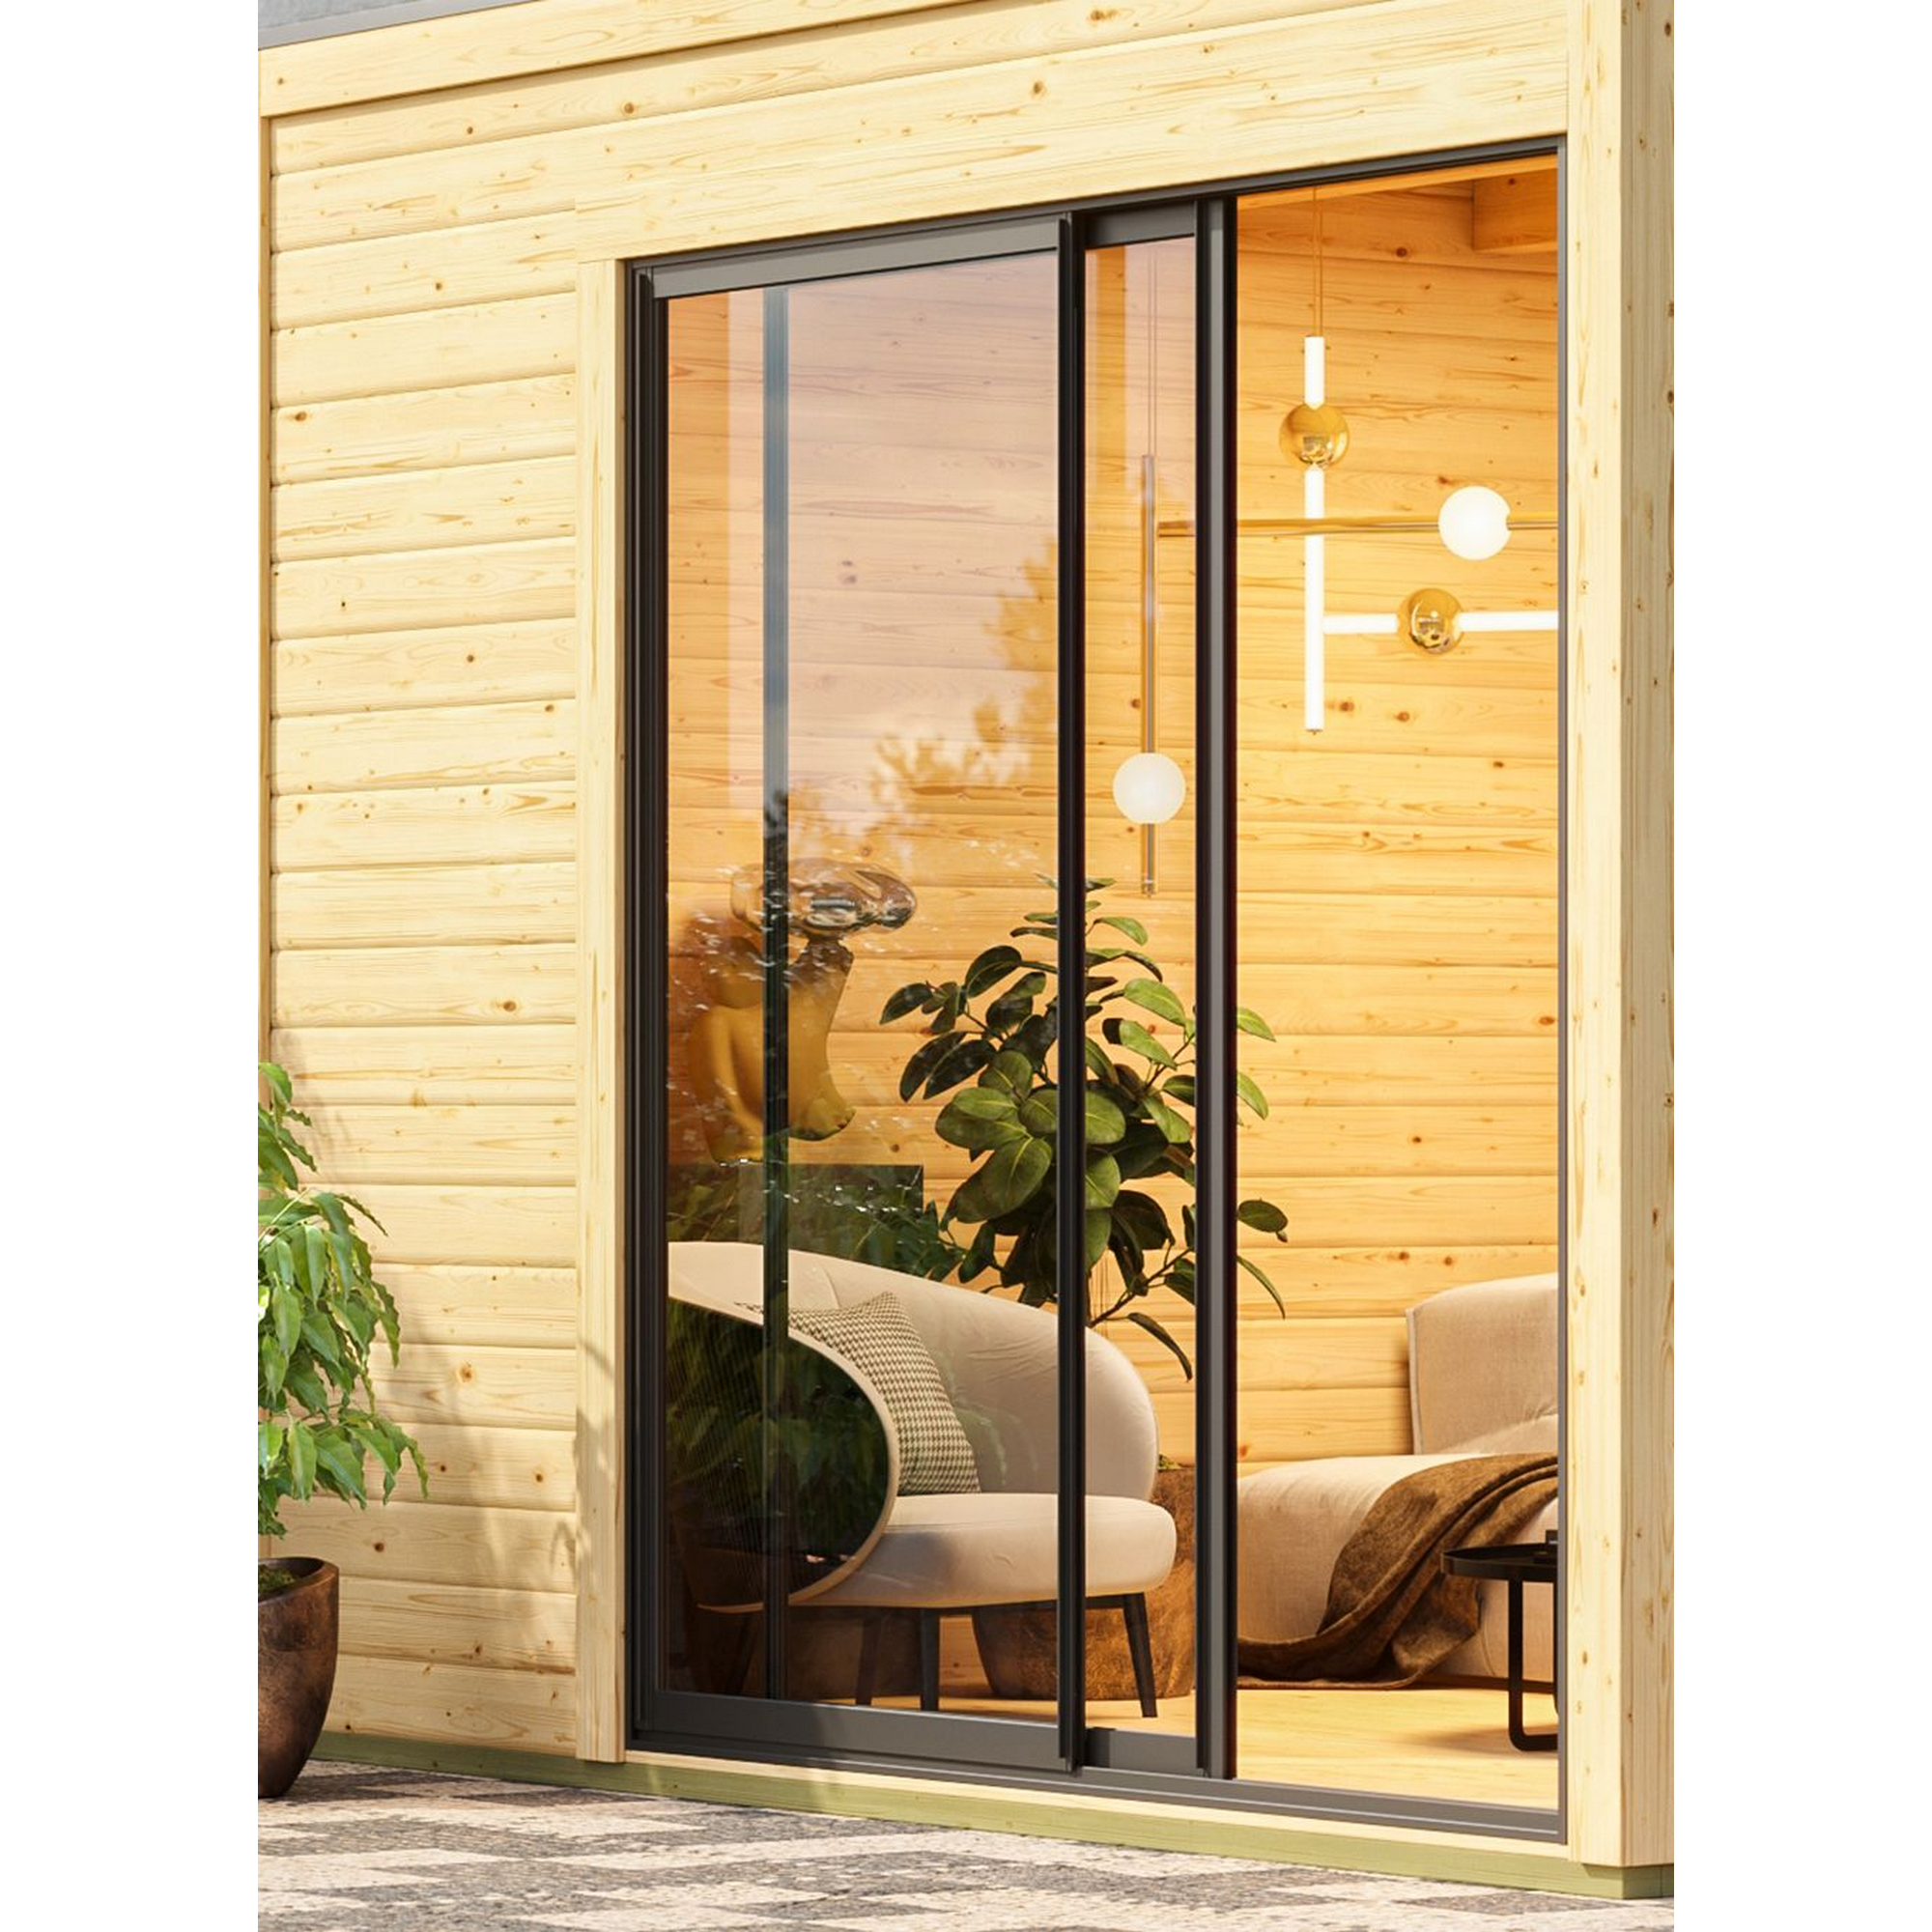 Gartenhaus mit Sauna 'Enrique 1 Variante B' naturbelassen 308 x 308 x 242 cm + product picture